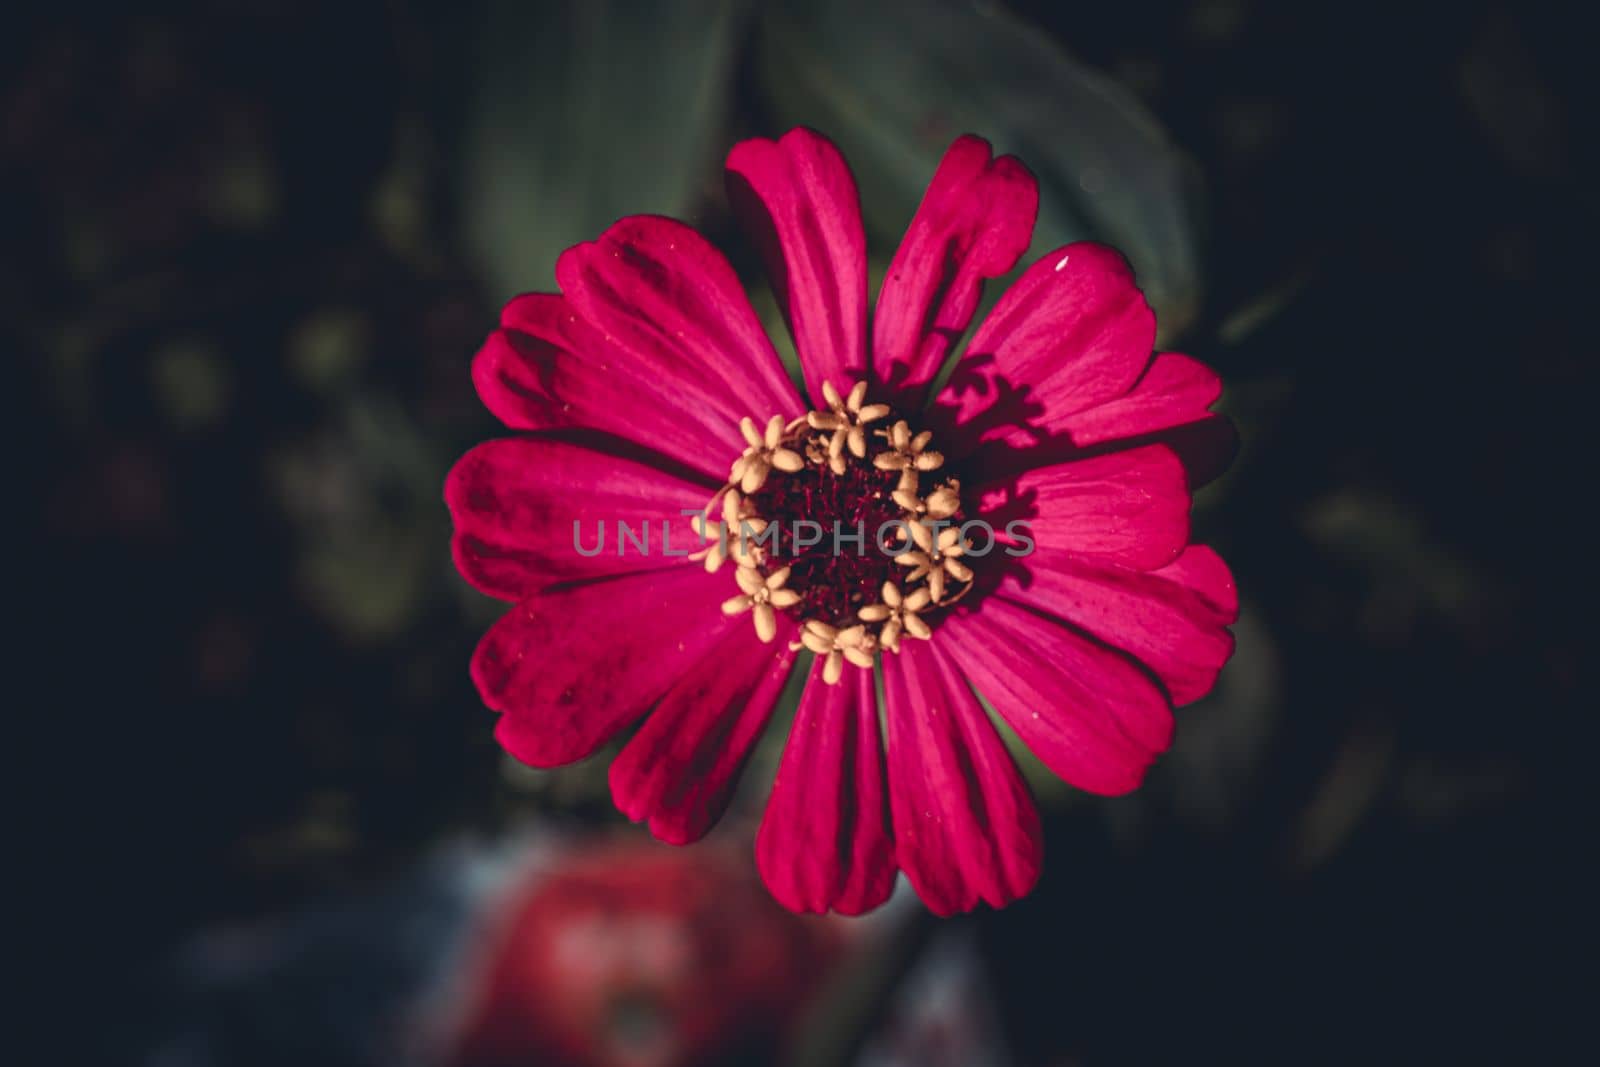 Pink Zinnia flower, Zinnia plant in the garden, selective focus, blur background